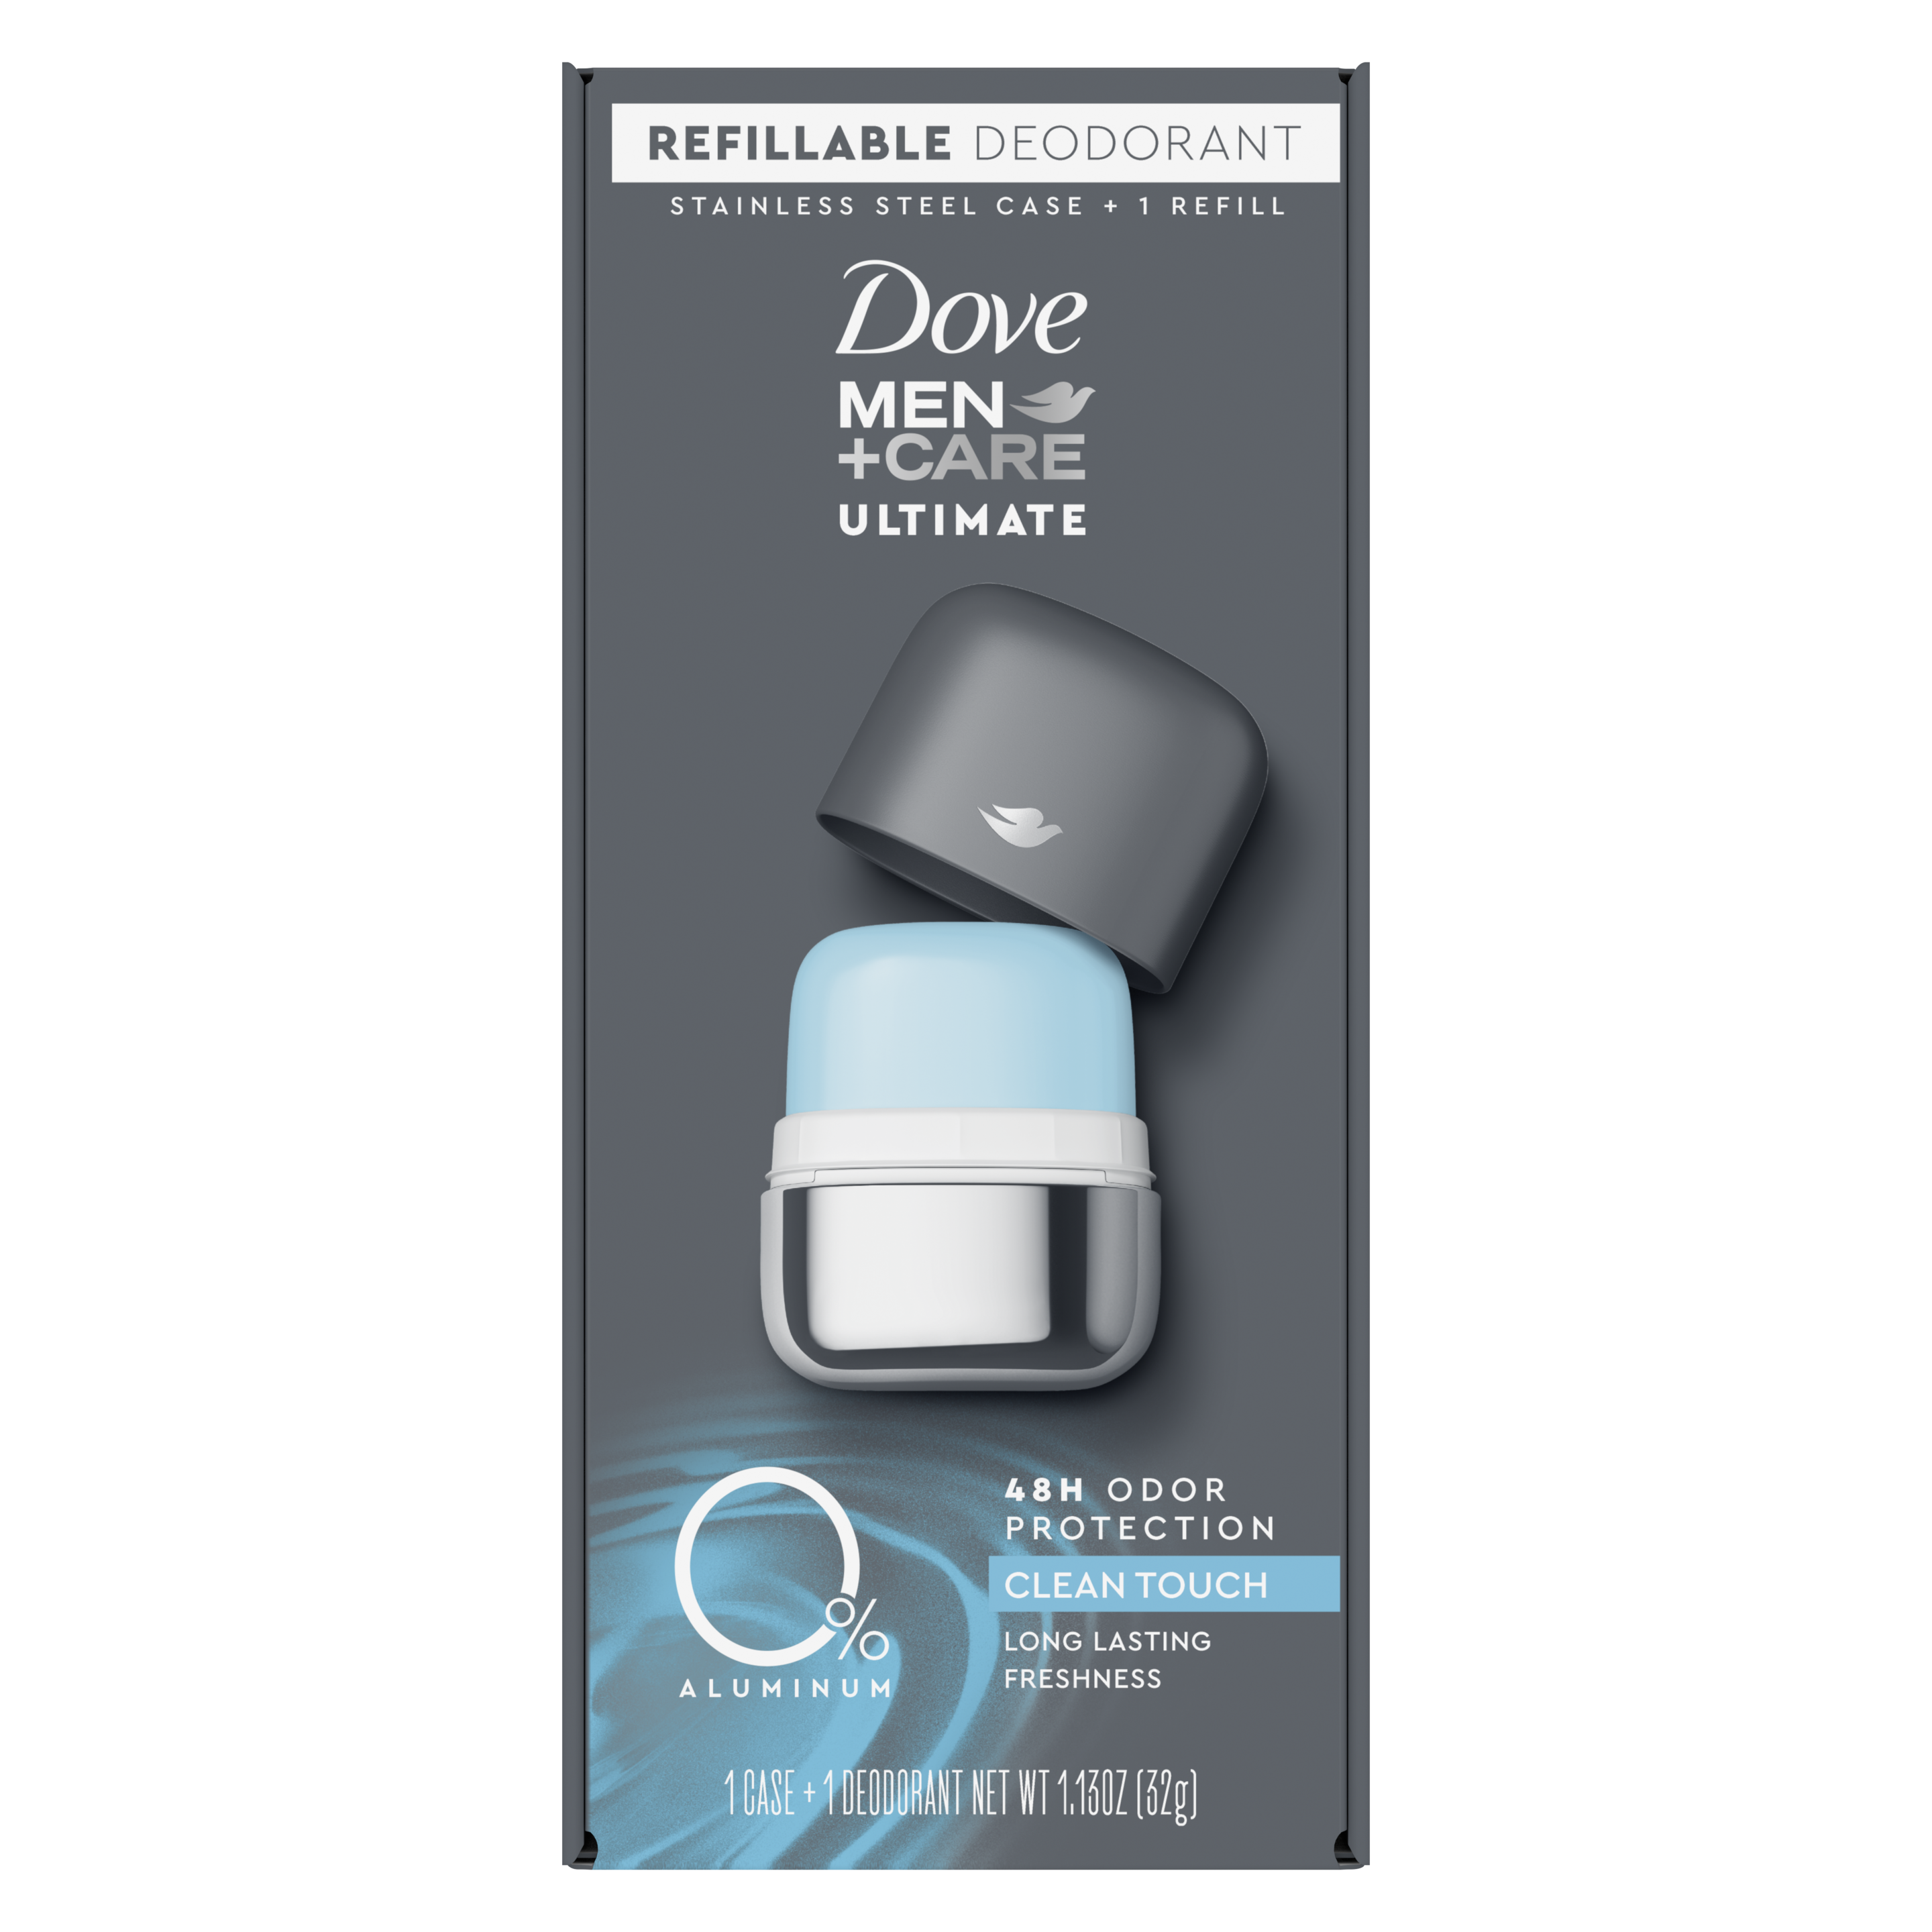 Dove Men+Care Ultimate Clean Touch 0% Aluminum Refillable Deodorant Kit